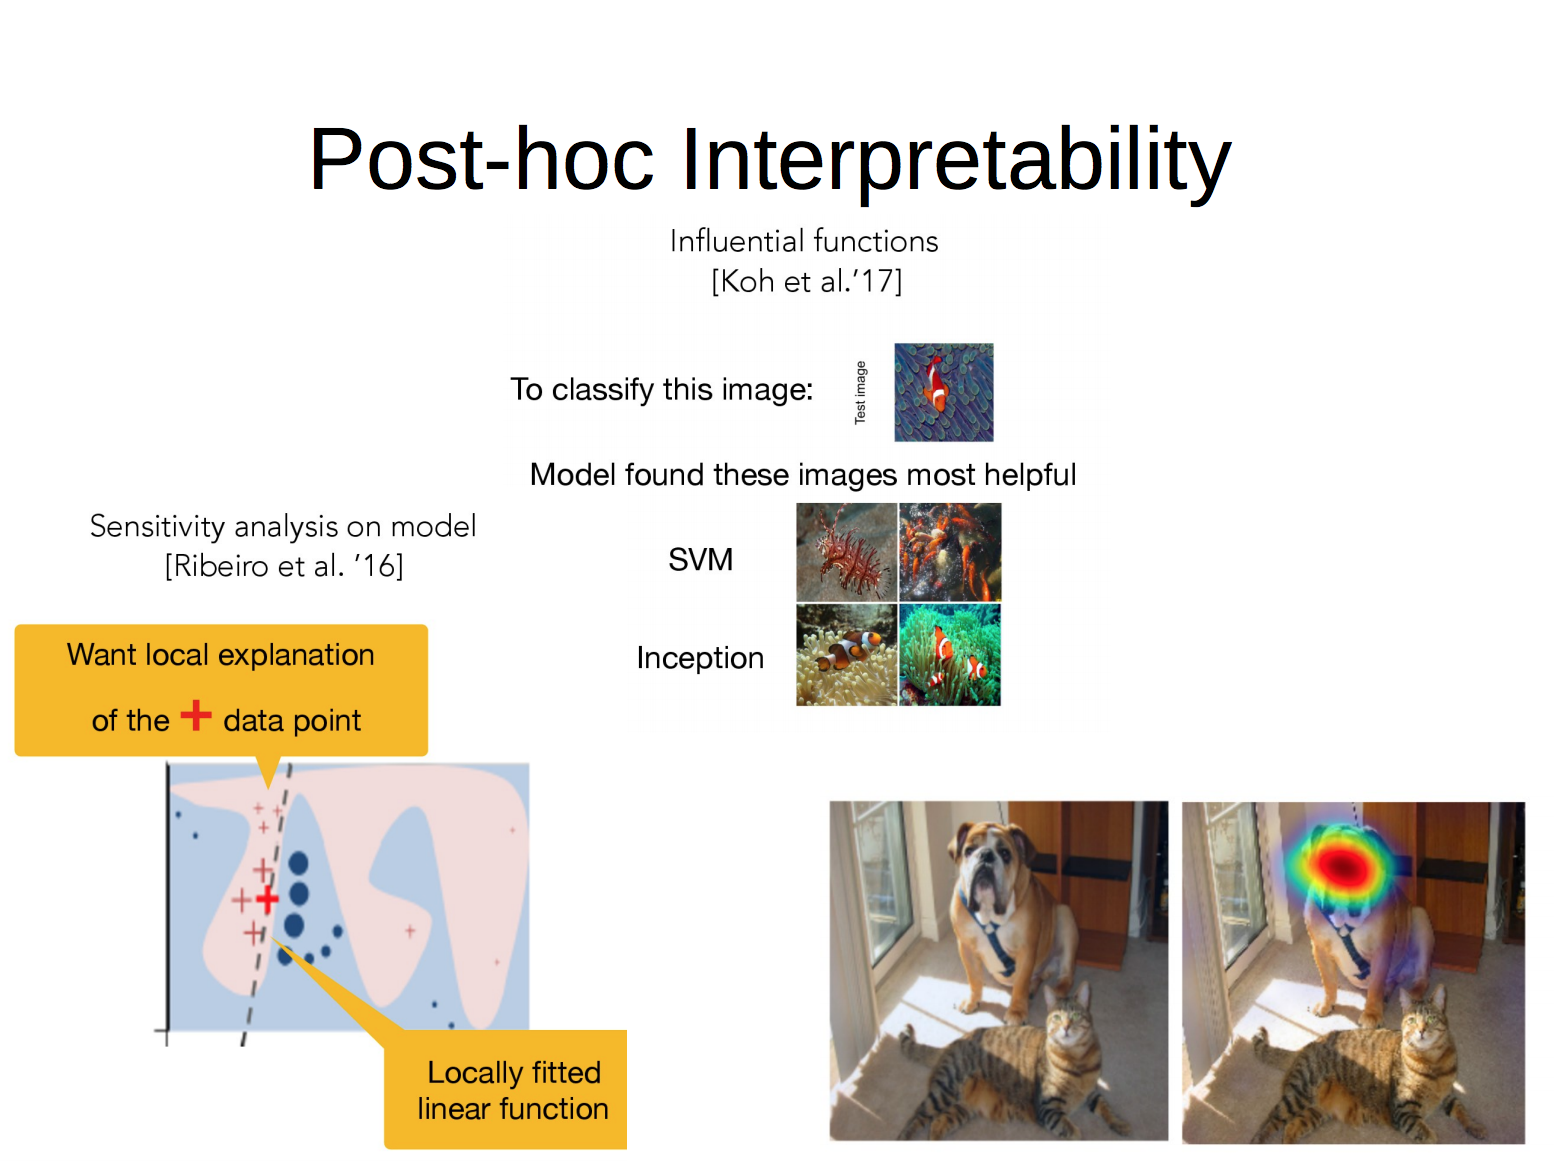 Post-hoc Intepretability